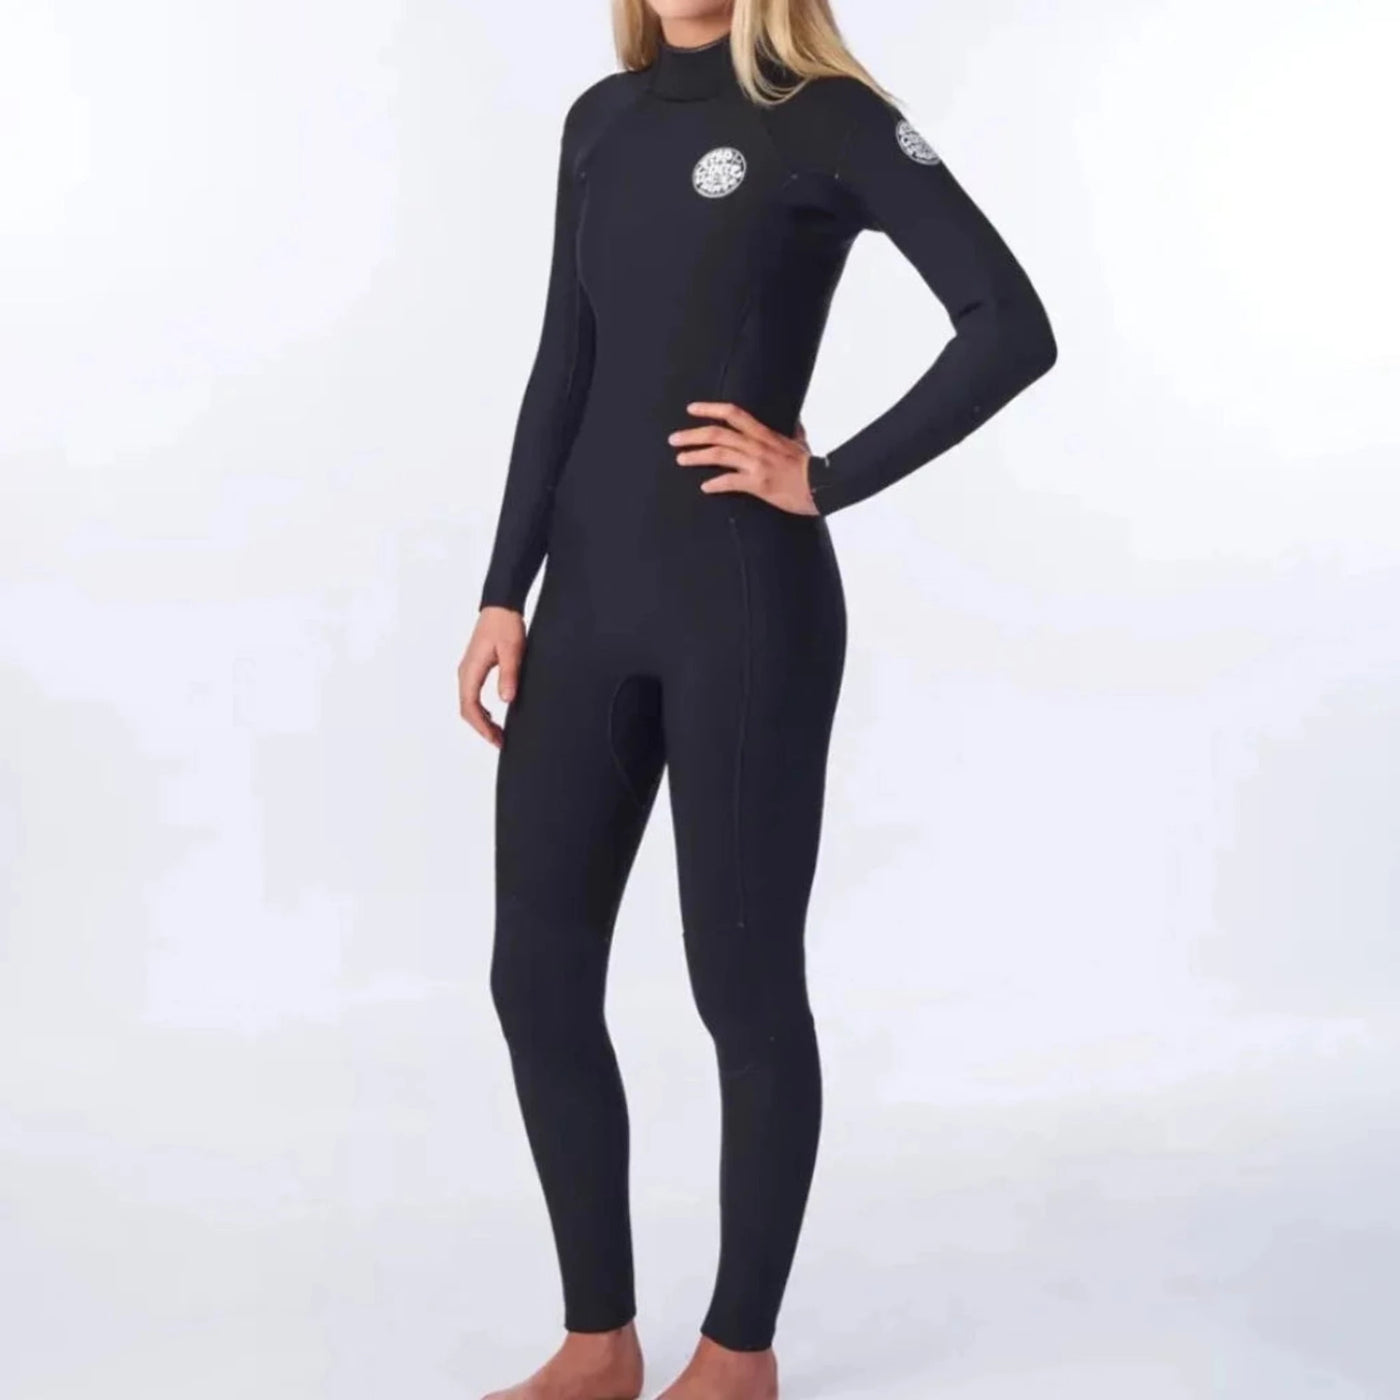 Rip Curl Dawn Patrol Women's 4/3mm Steamer Wetsuit - Back Zip